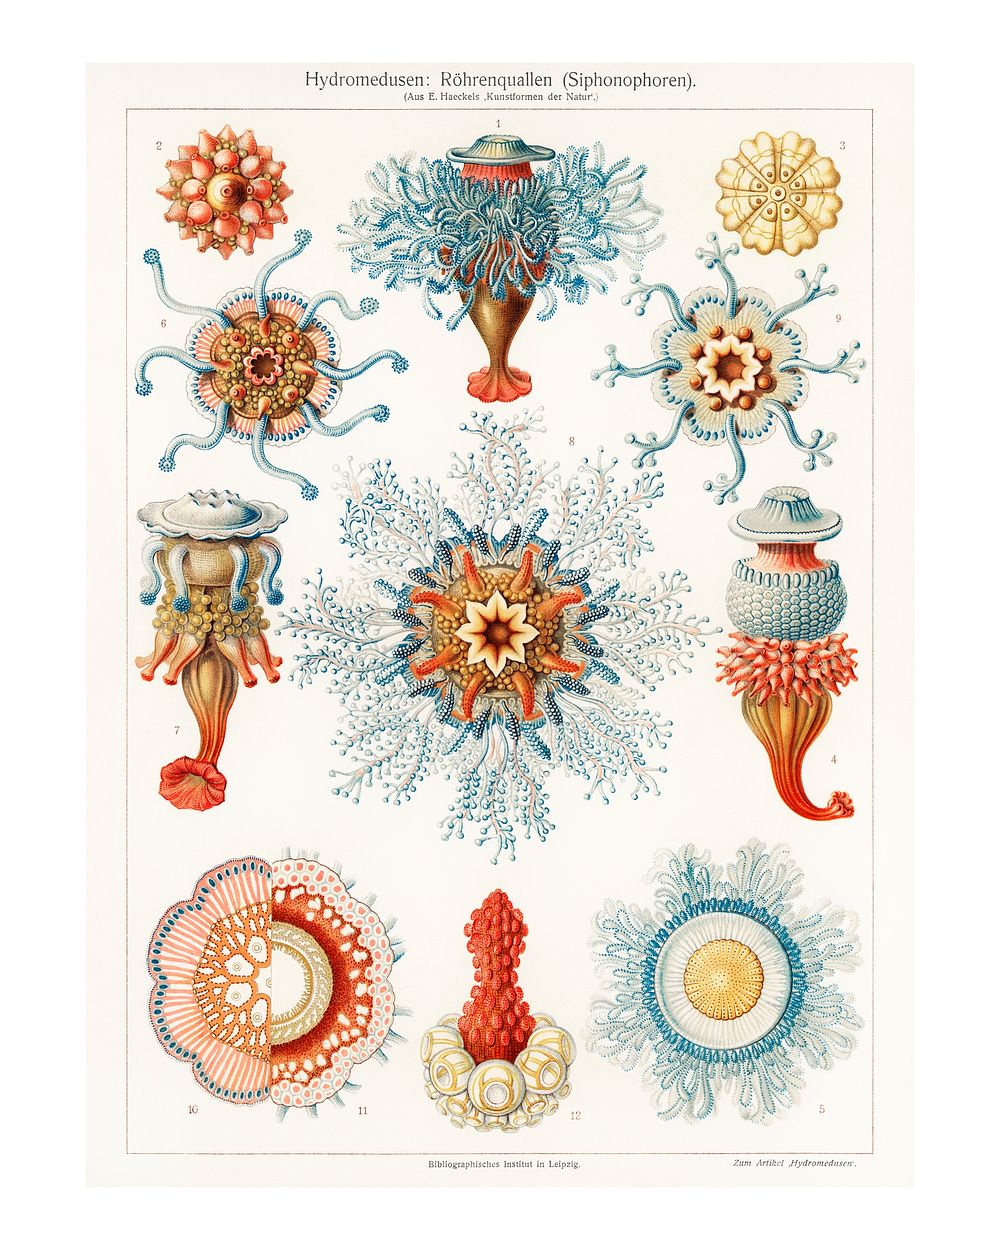 Tube jellyfish vintage illustration wall art print and poster design remix from original artwork